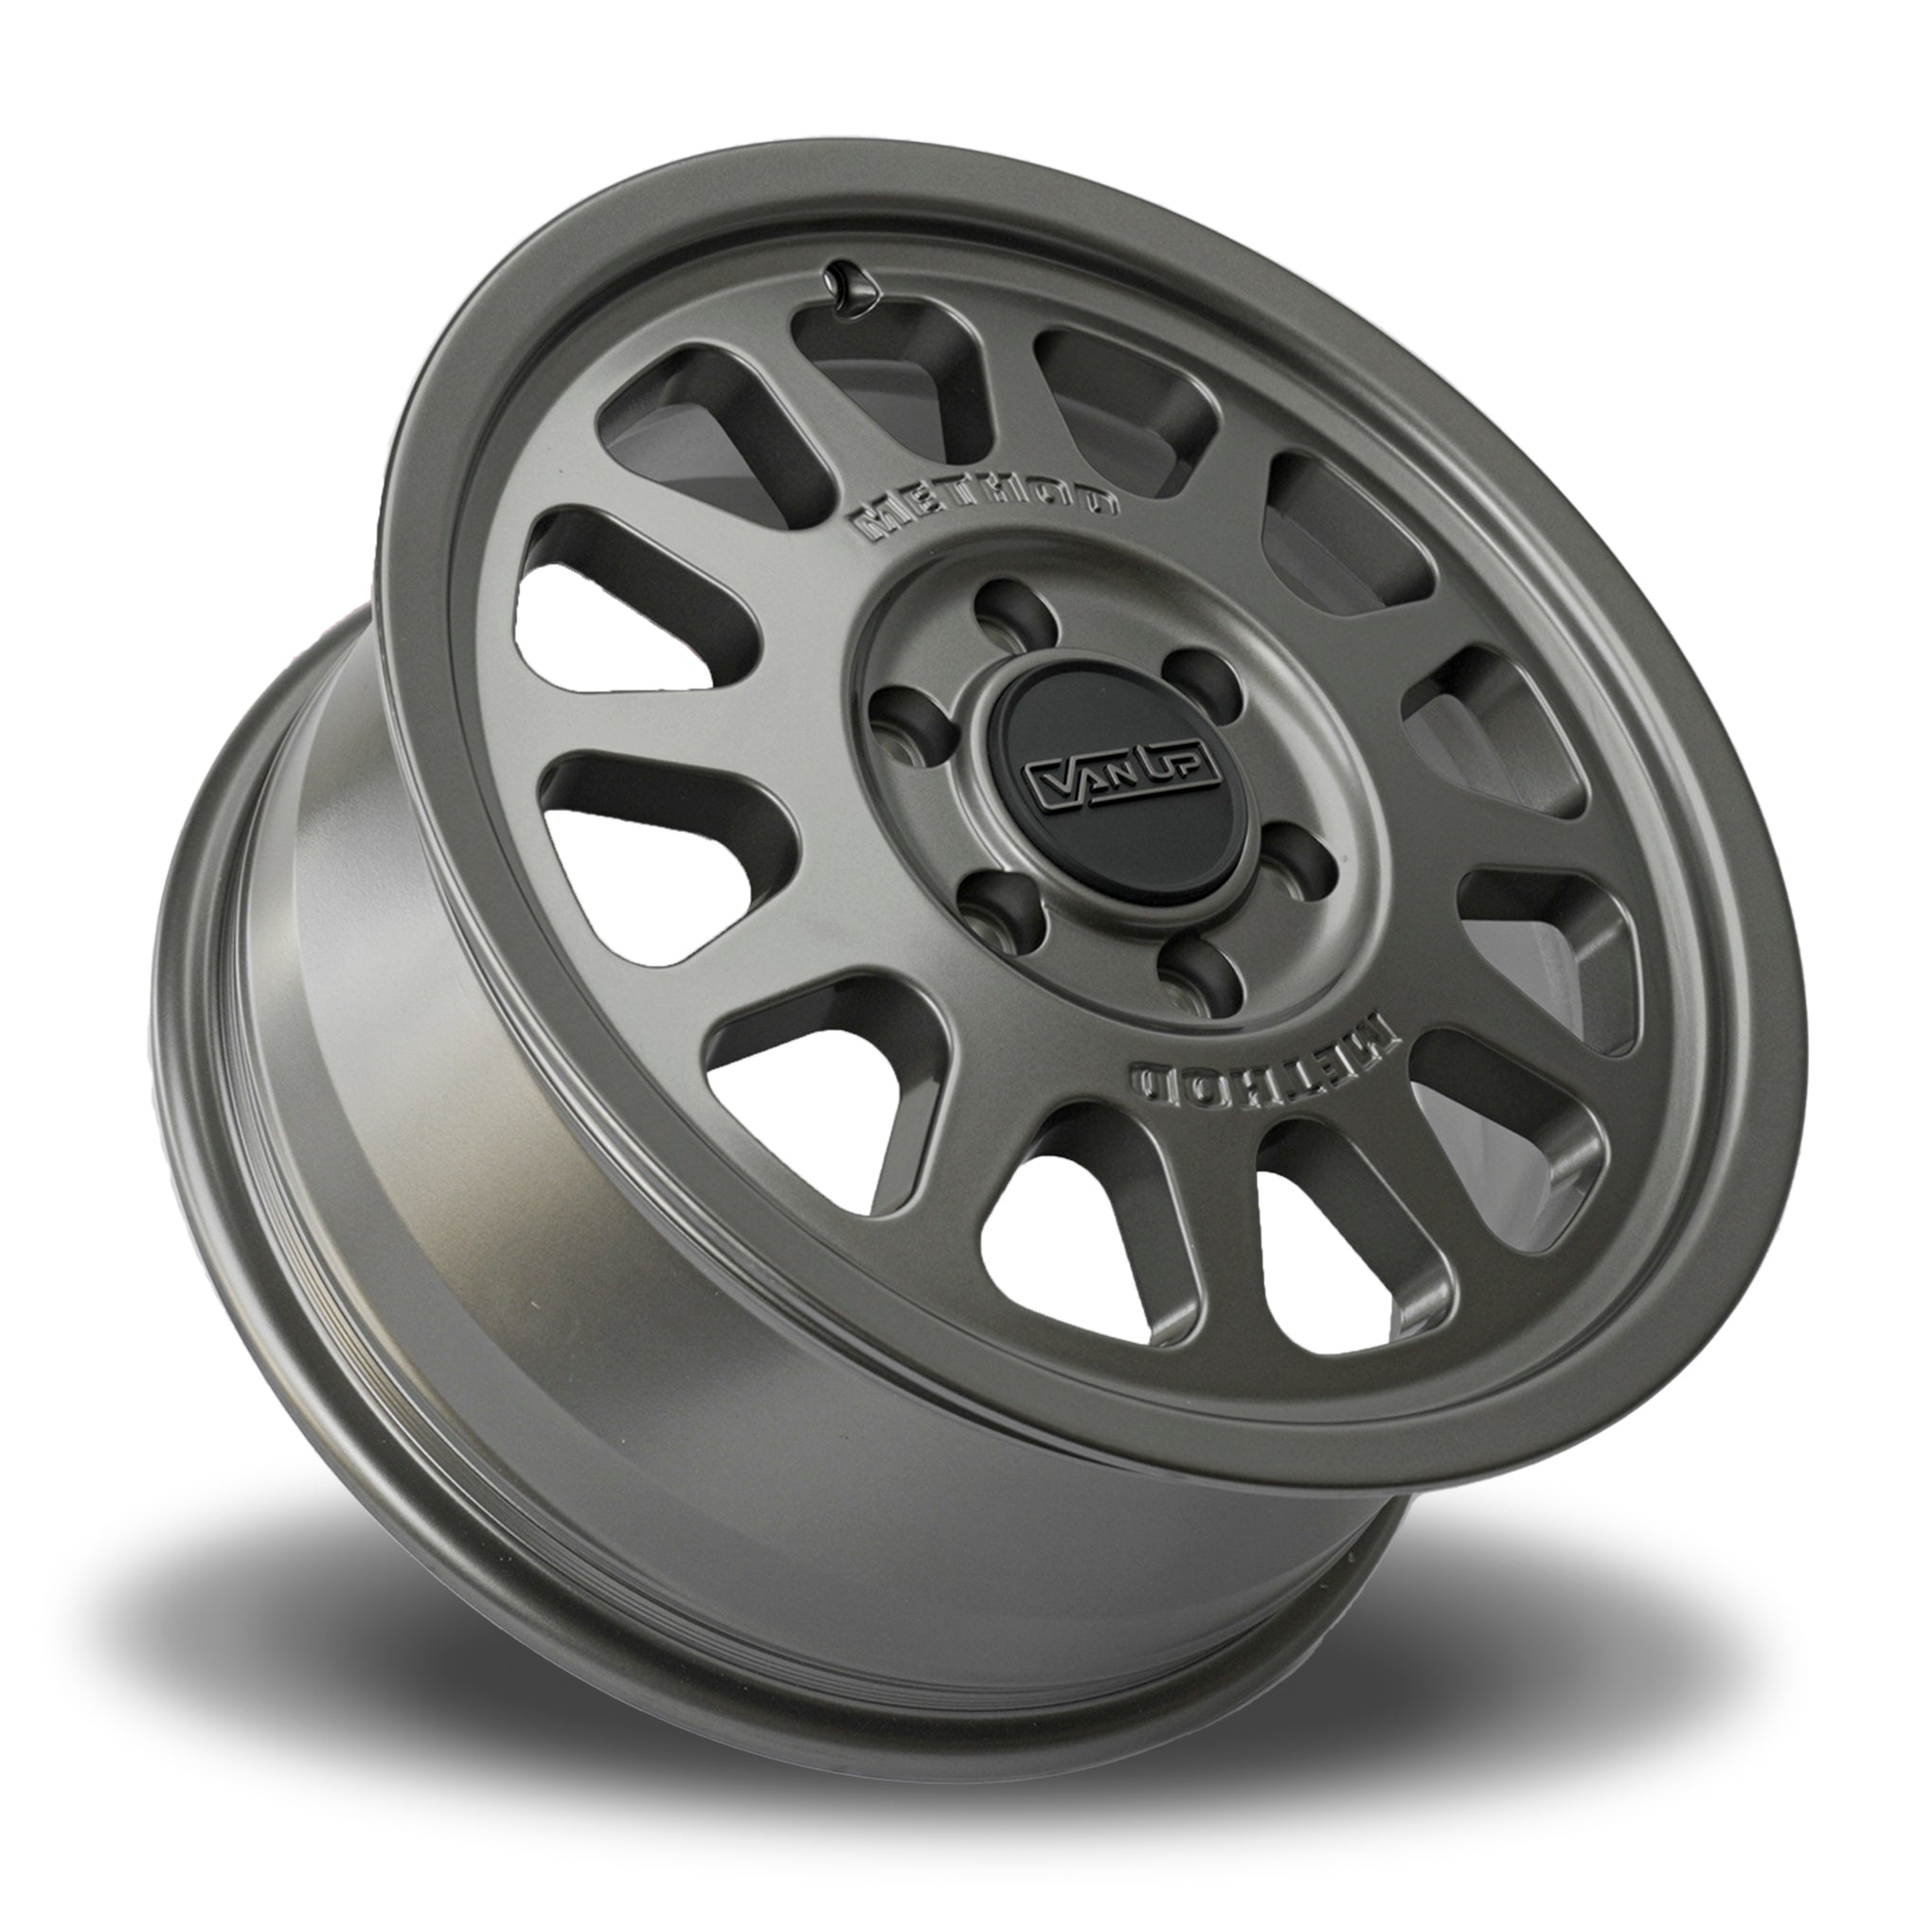 Method MR703 VanUp Steel Gray Wheel | 17x7.5 6x130 50mm